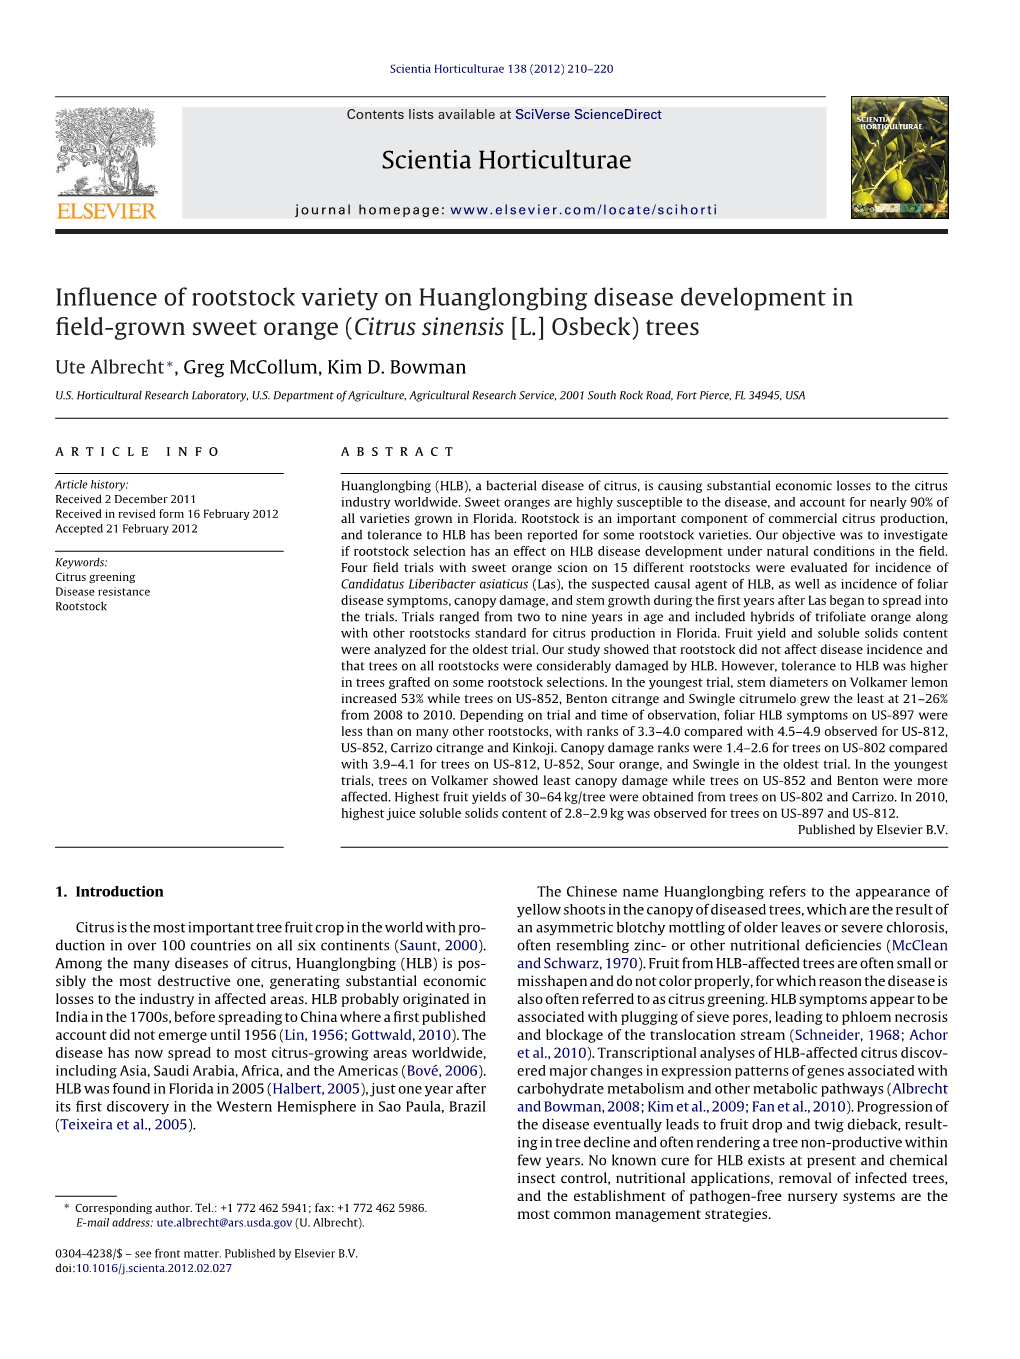 Influence of Rootstock Variety on Huanglongbing Disease Development in Field-Grown Sweet Orange